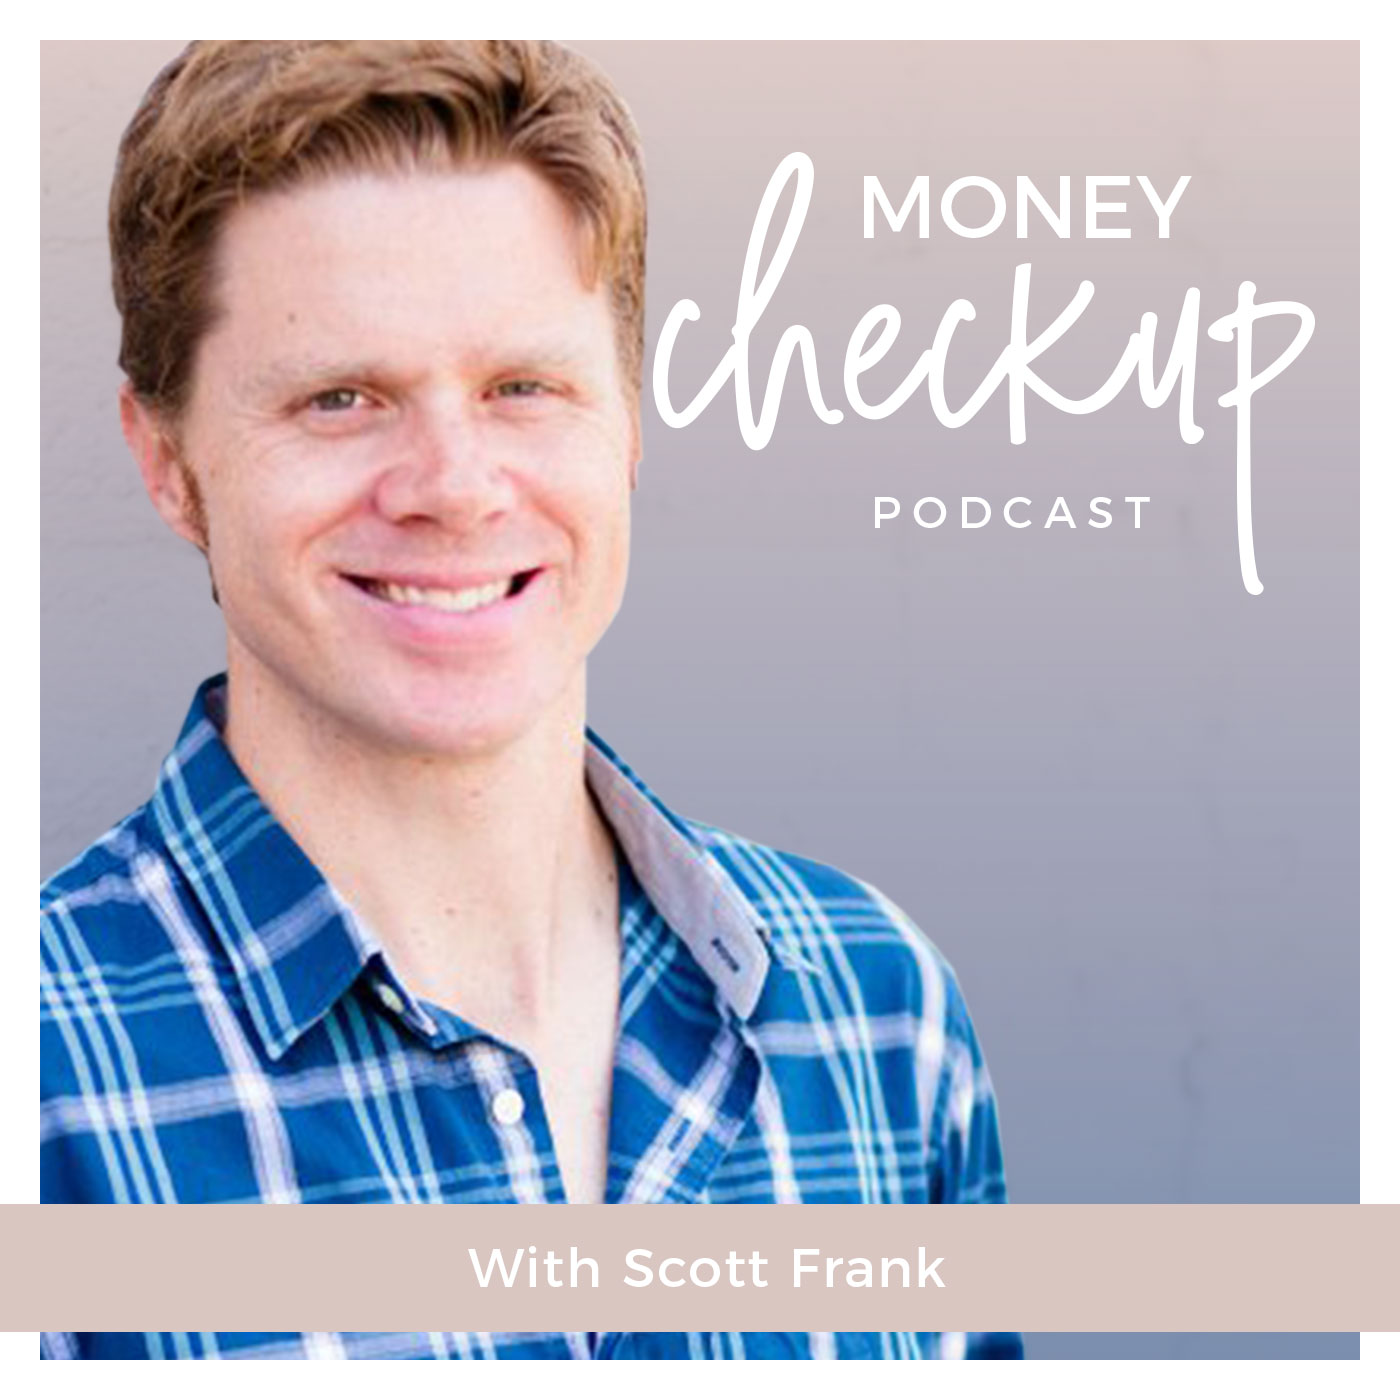 "Money checkup Podcast with Scott Frank"